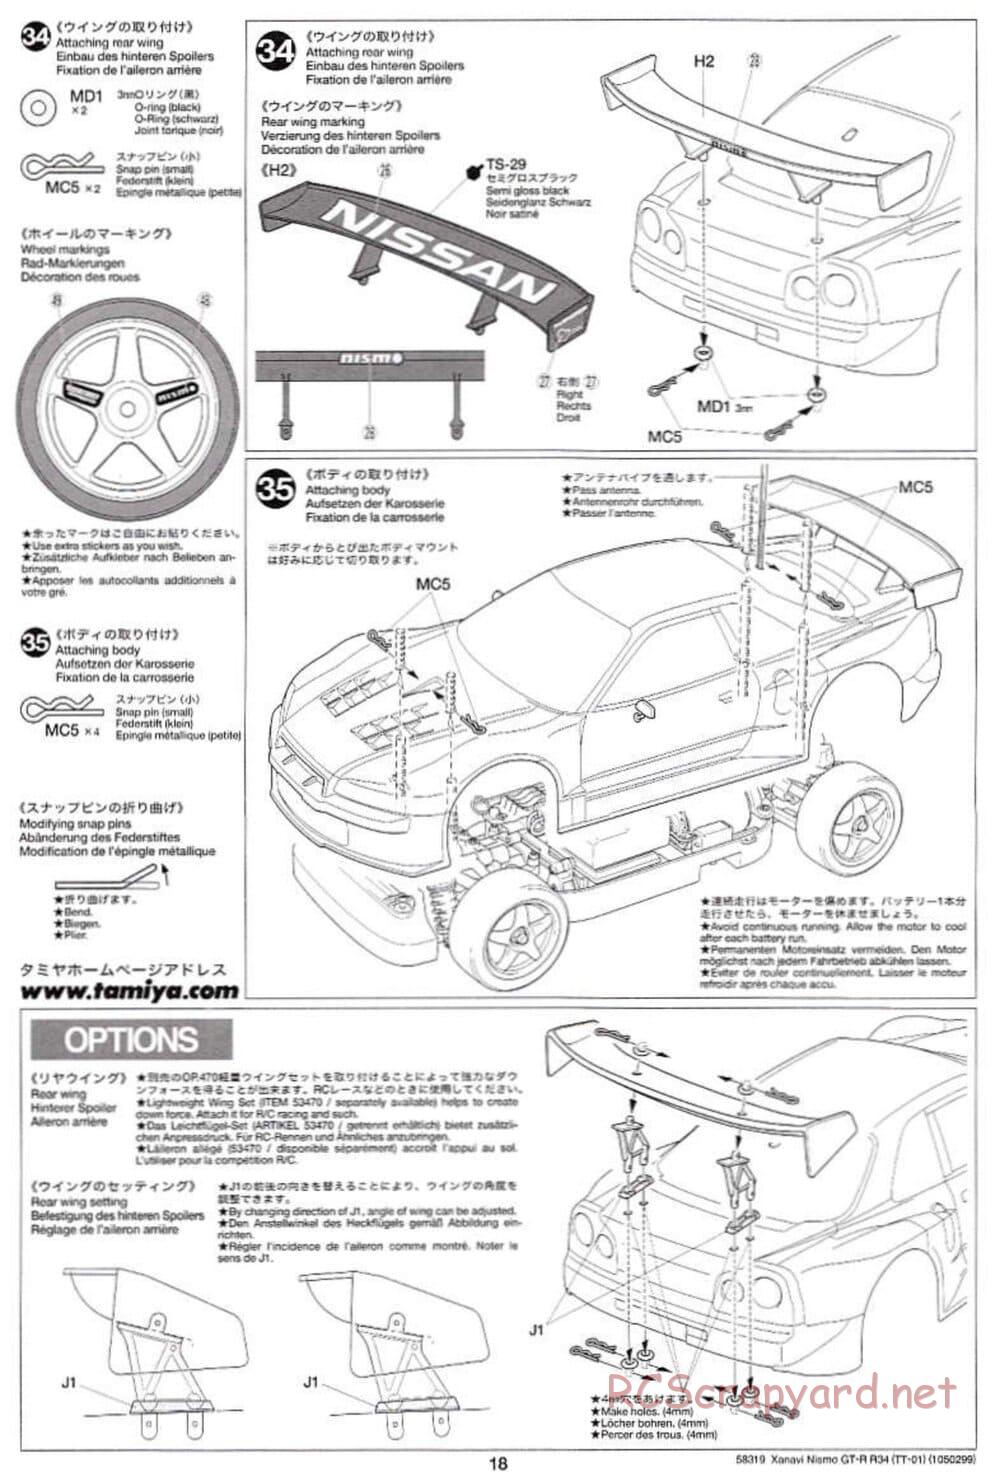 Tamiya - Xanavi Nismo GT-R R34 - TT-01 Chassis - Manual - Page 18